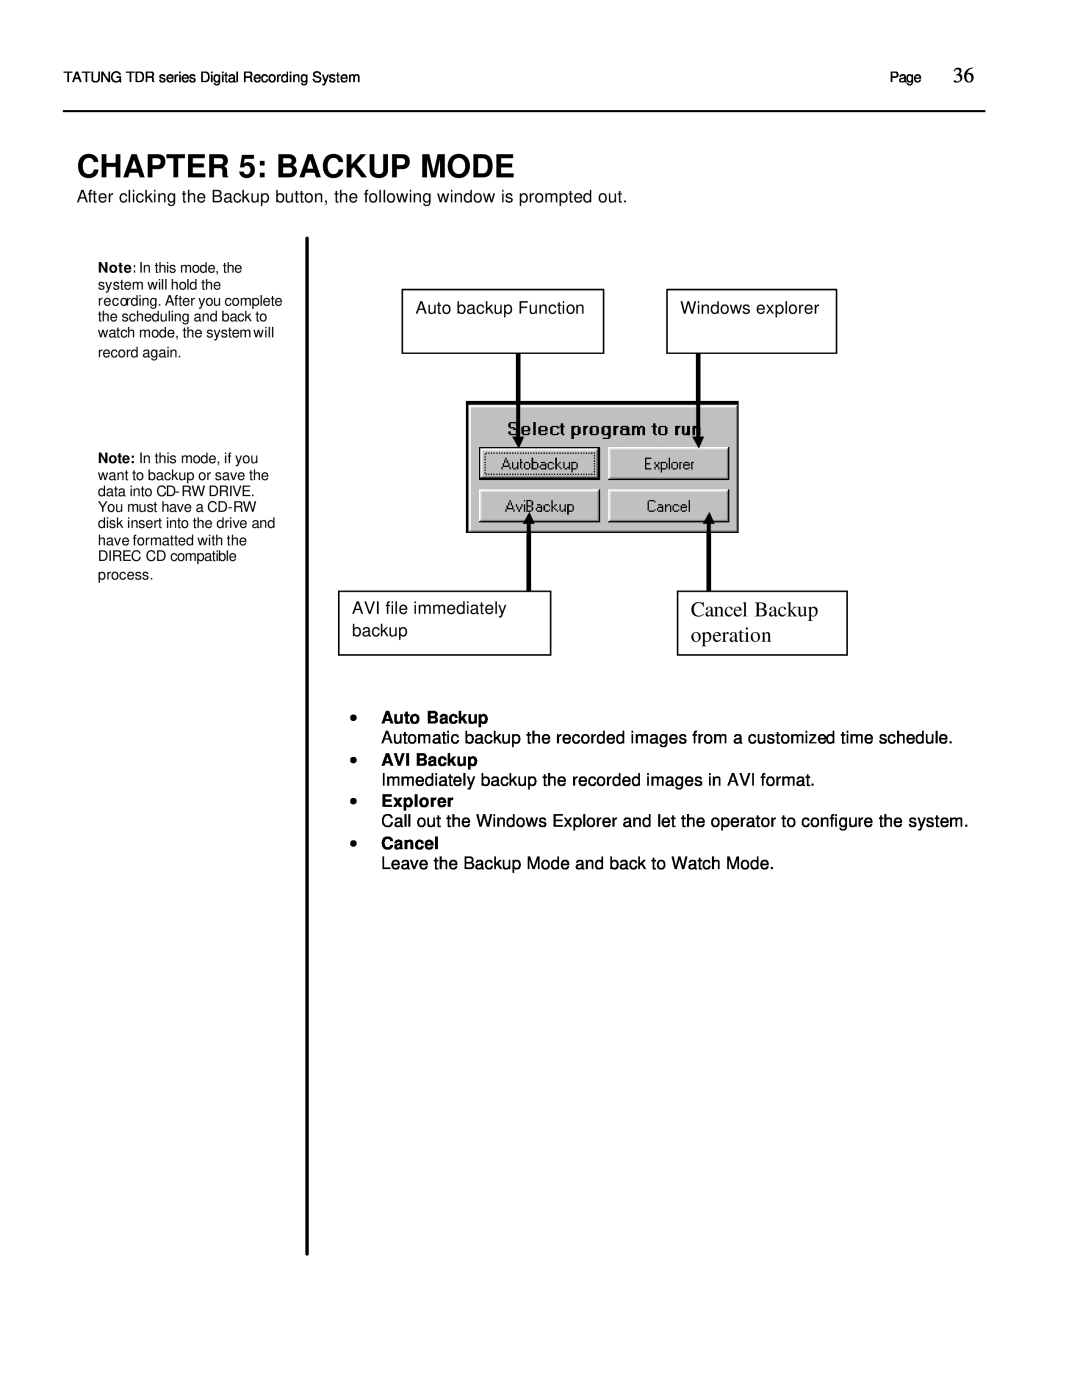 Tatung TDR-22XX operation manual Backup Mode, Cancel Backup operation, ∙ Auto Backup, ∙ AVI Backup, ∙ Explorer, ∙ Cancel 